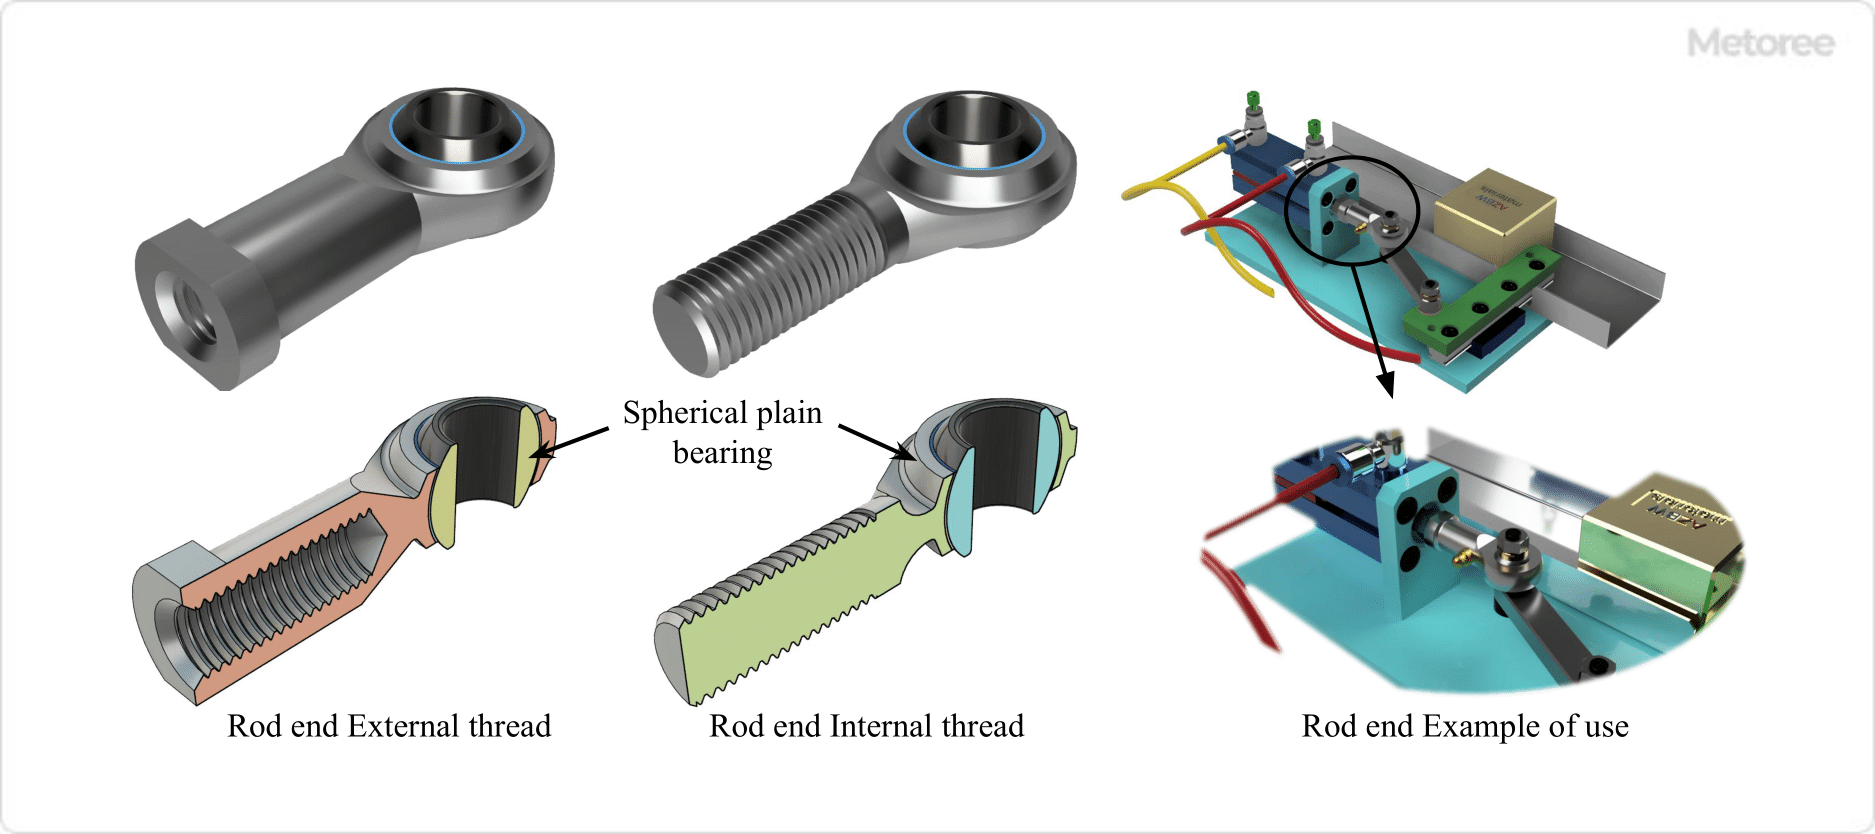 Figure 1. Applications of spherical plain bearings